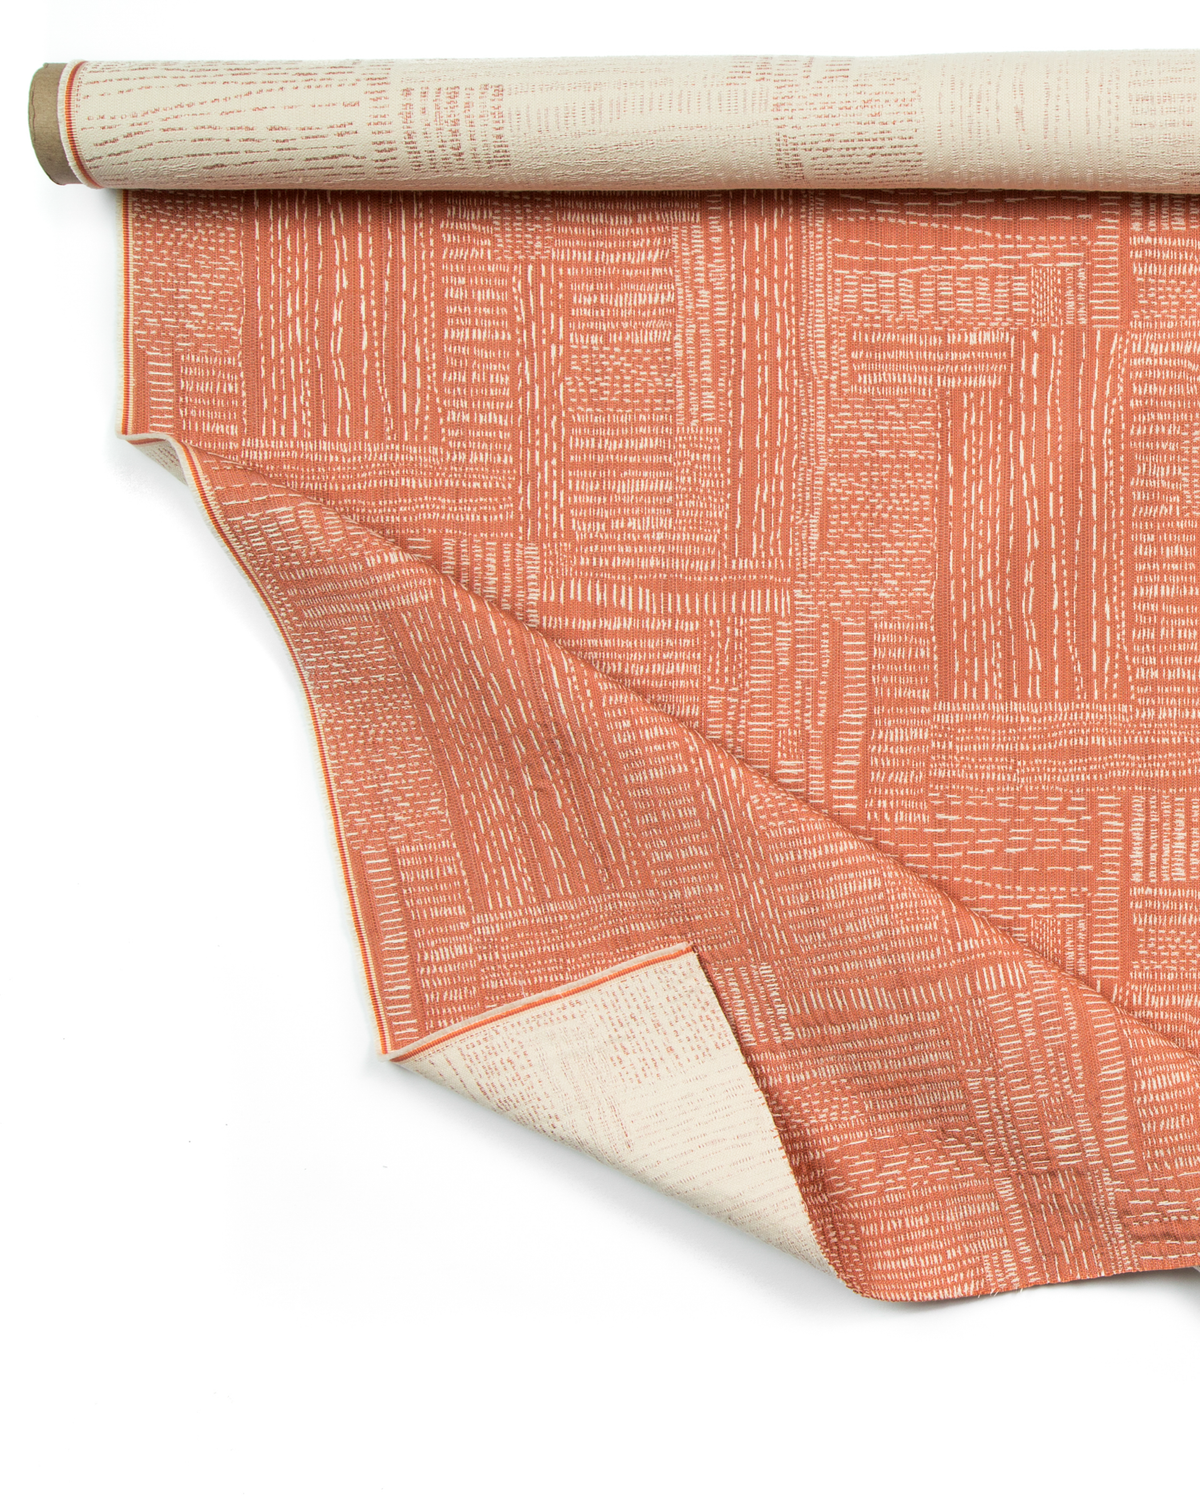 Sashiko Stitch Fabric in Tangerine